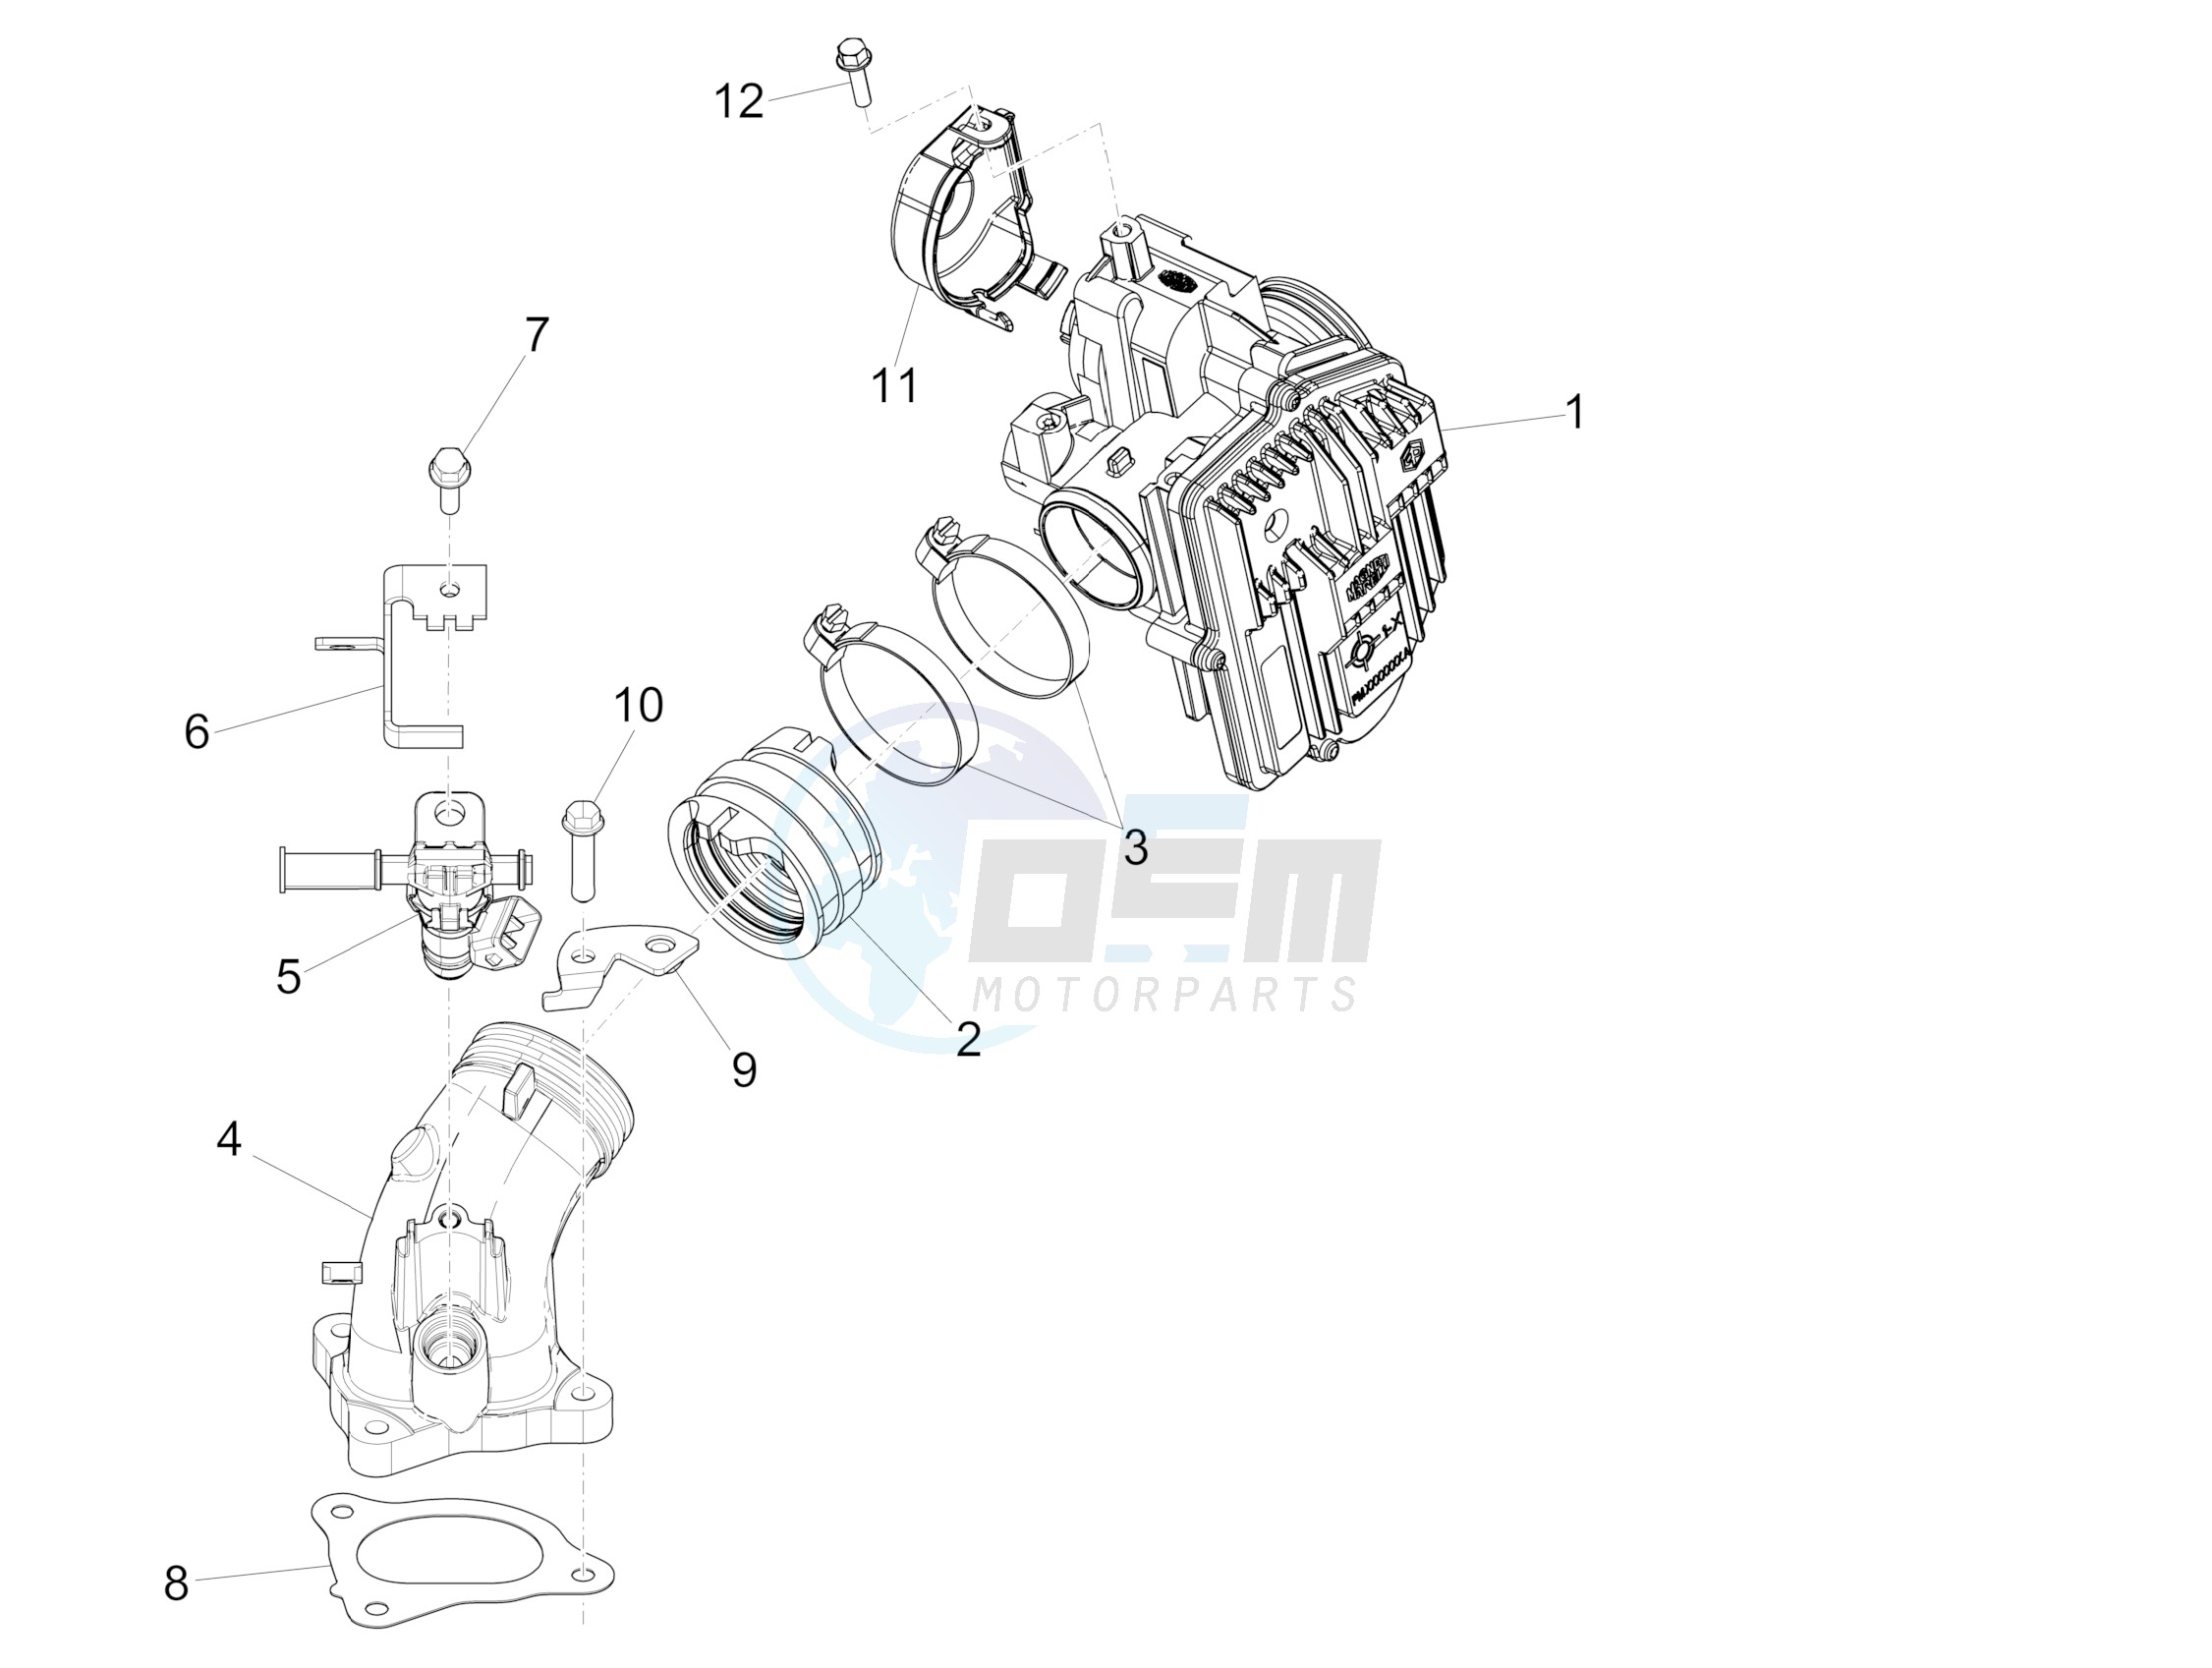 Throttle body - Injector - Union pipe blueprint